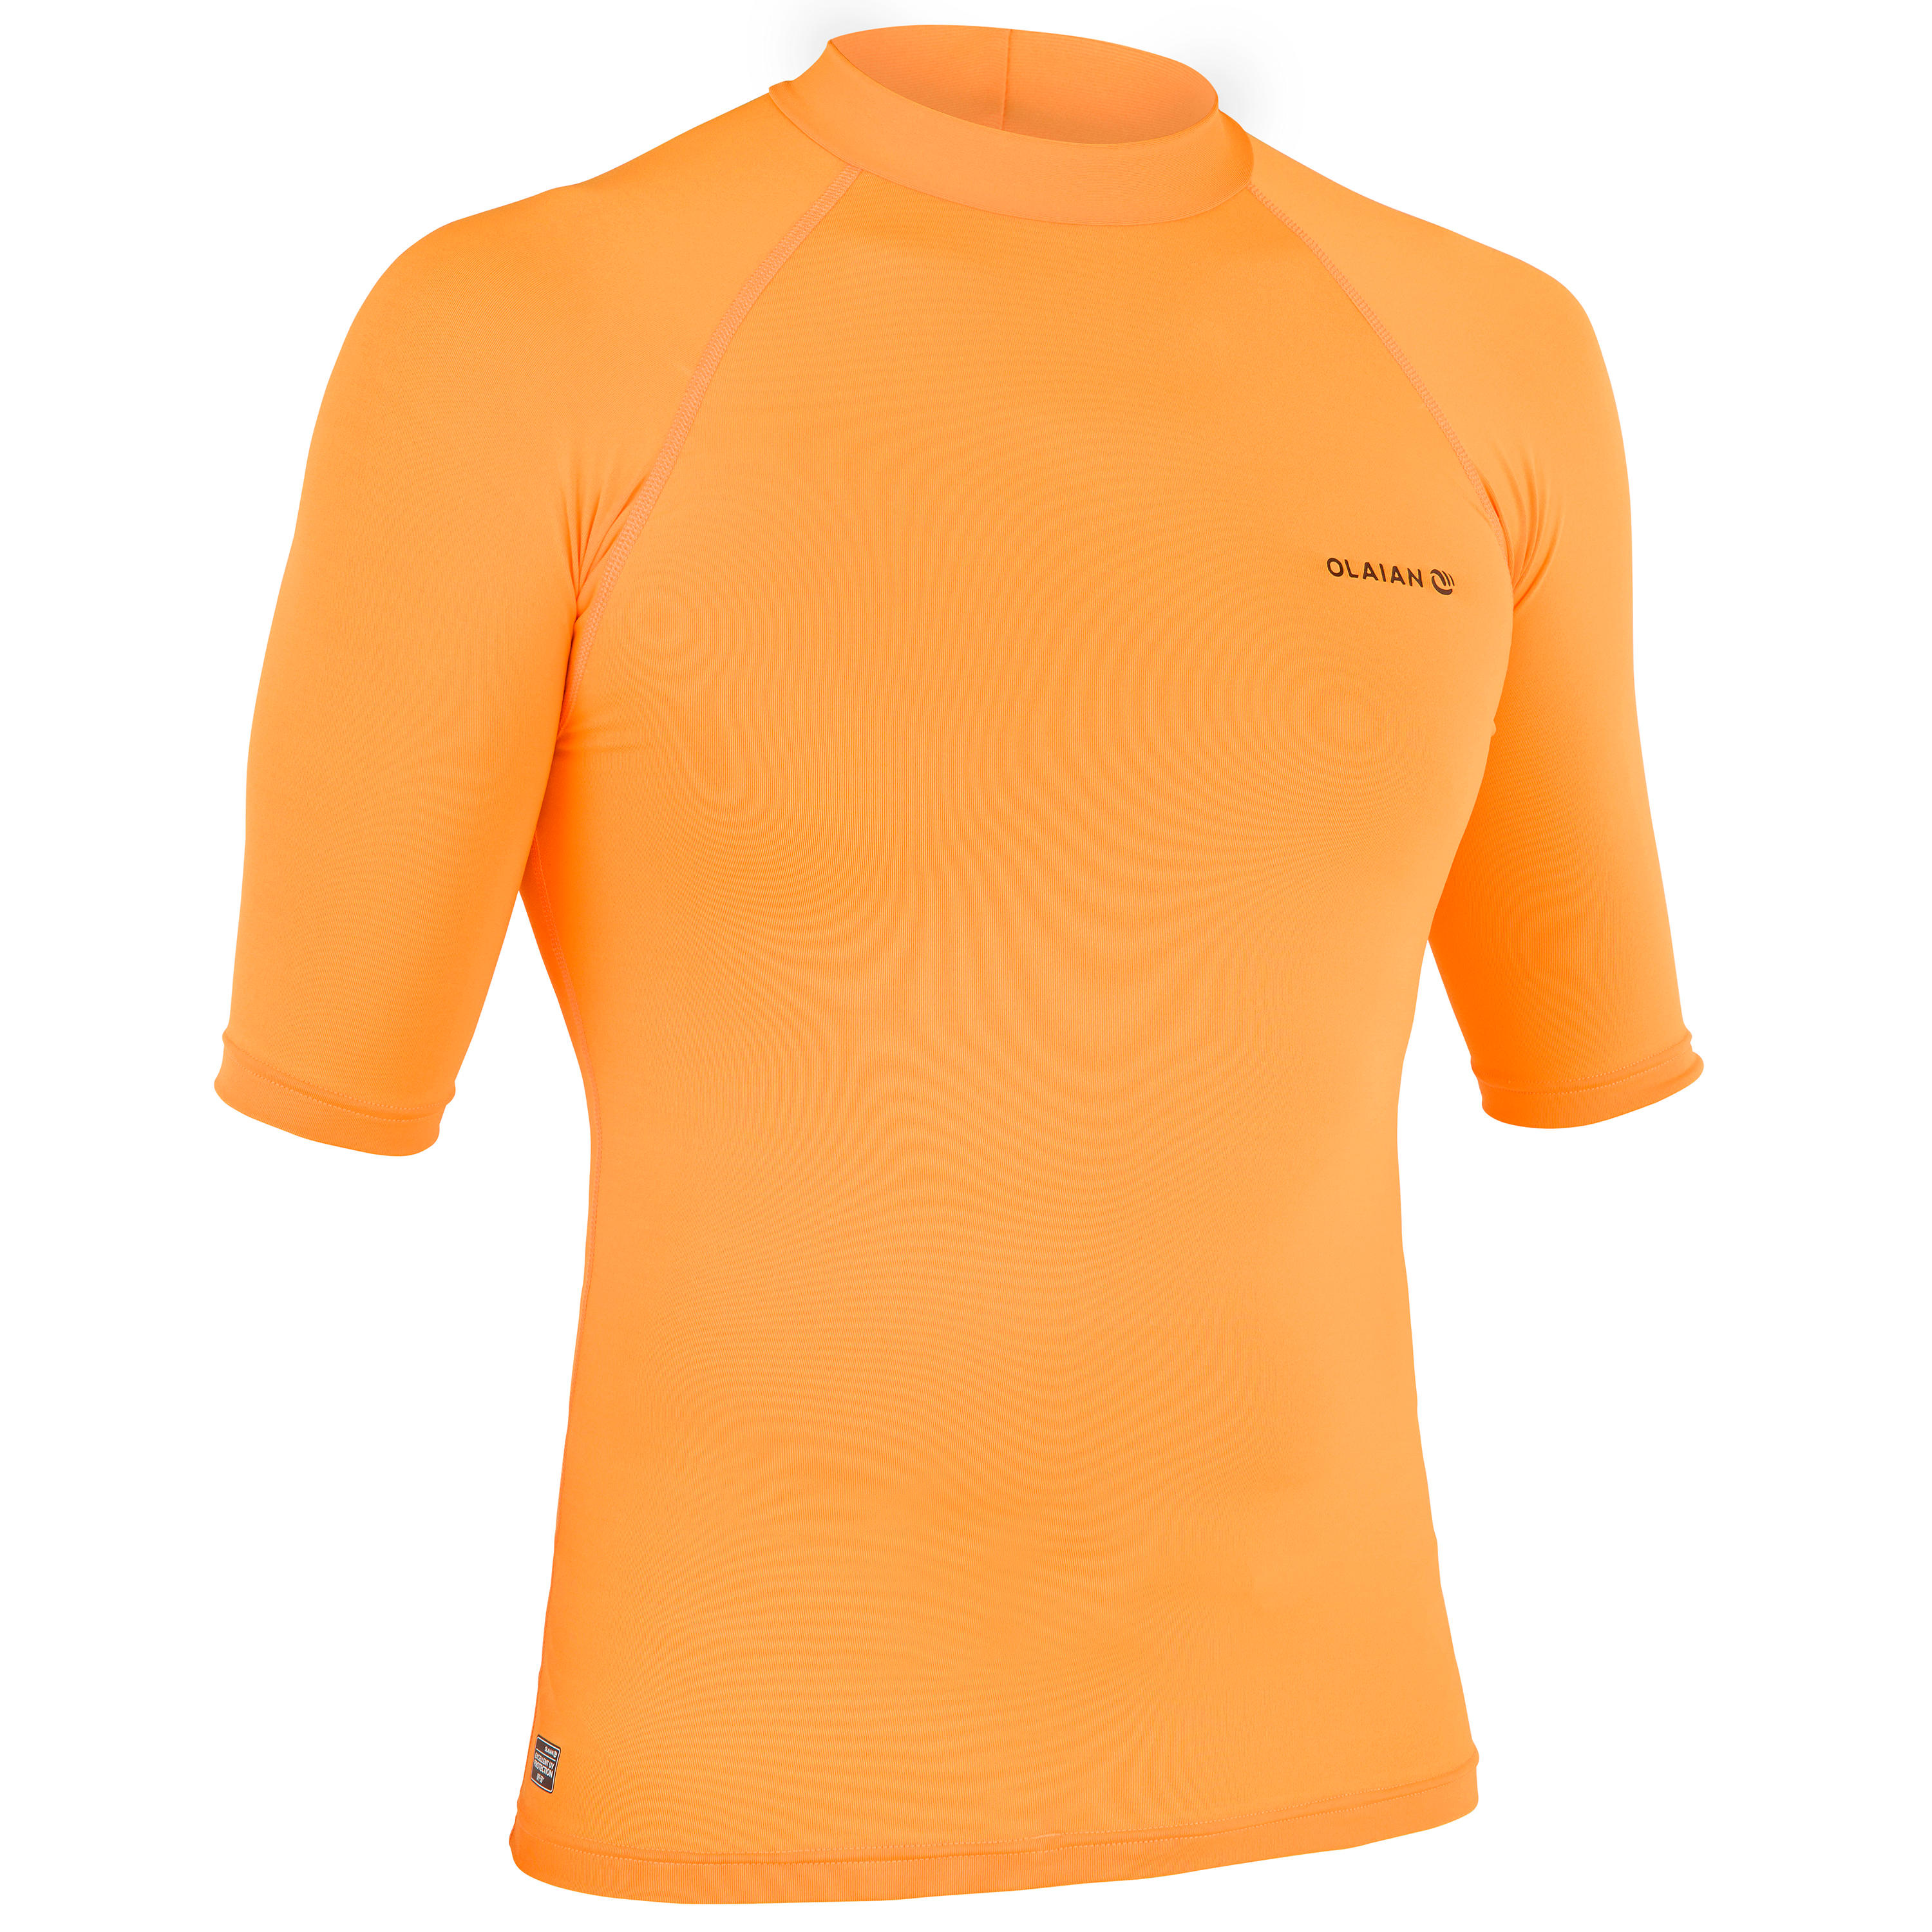 correcto Civilizar Gran engaño Camisetas Fluorescentes Decathlon Online Shop, UP TO 61% OFF |  agrichembio.com